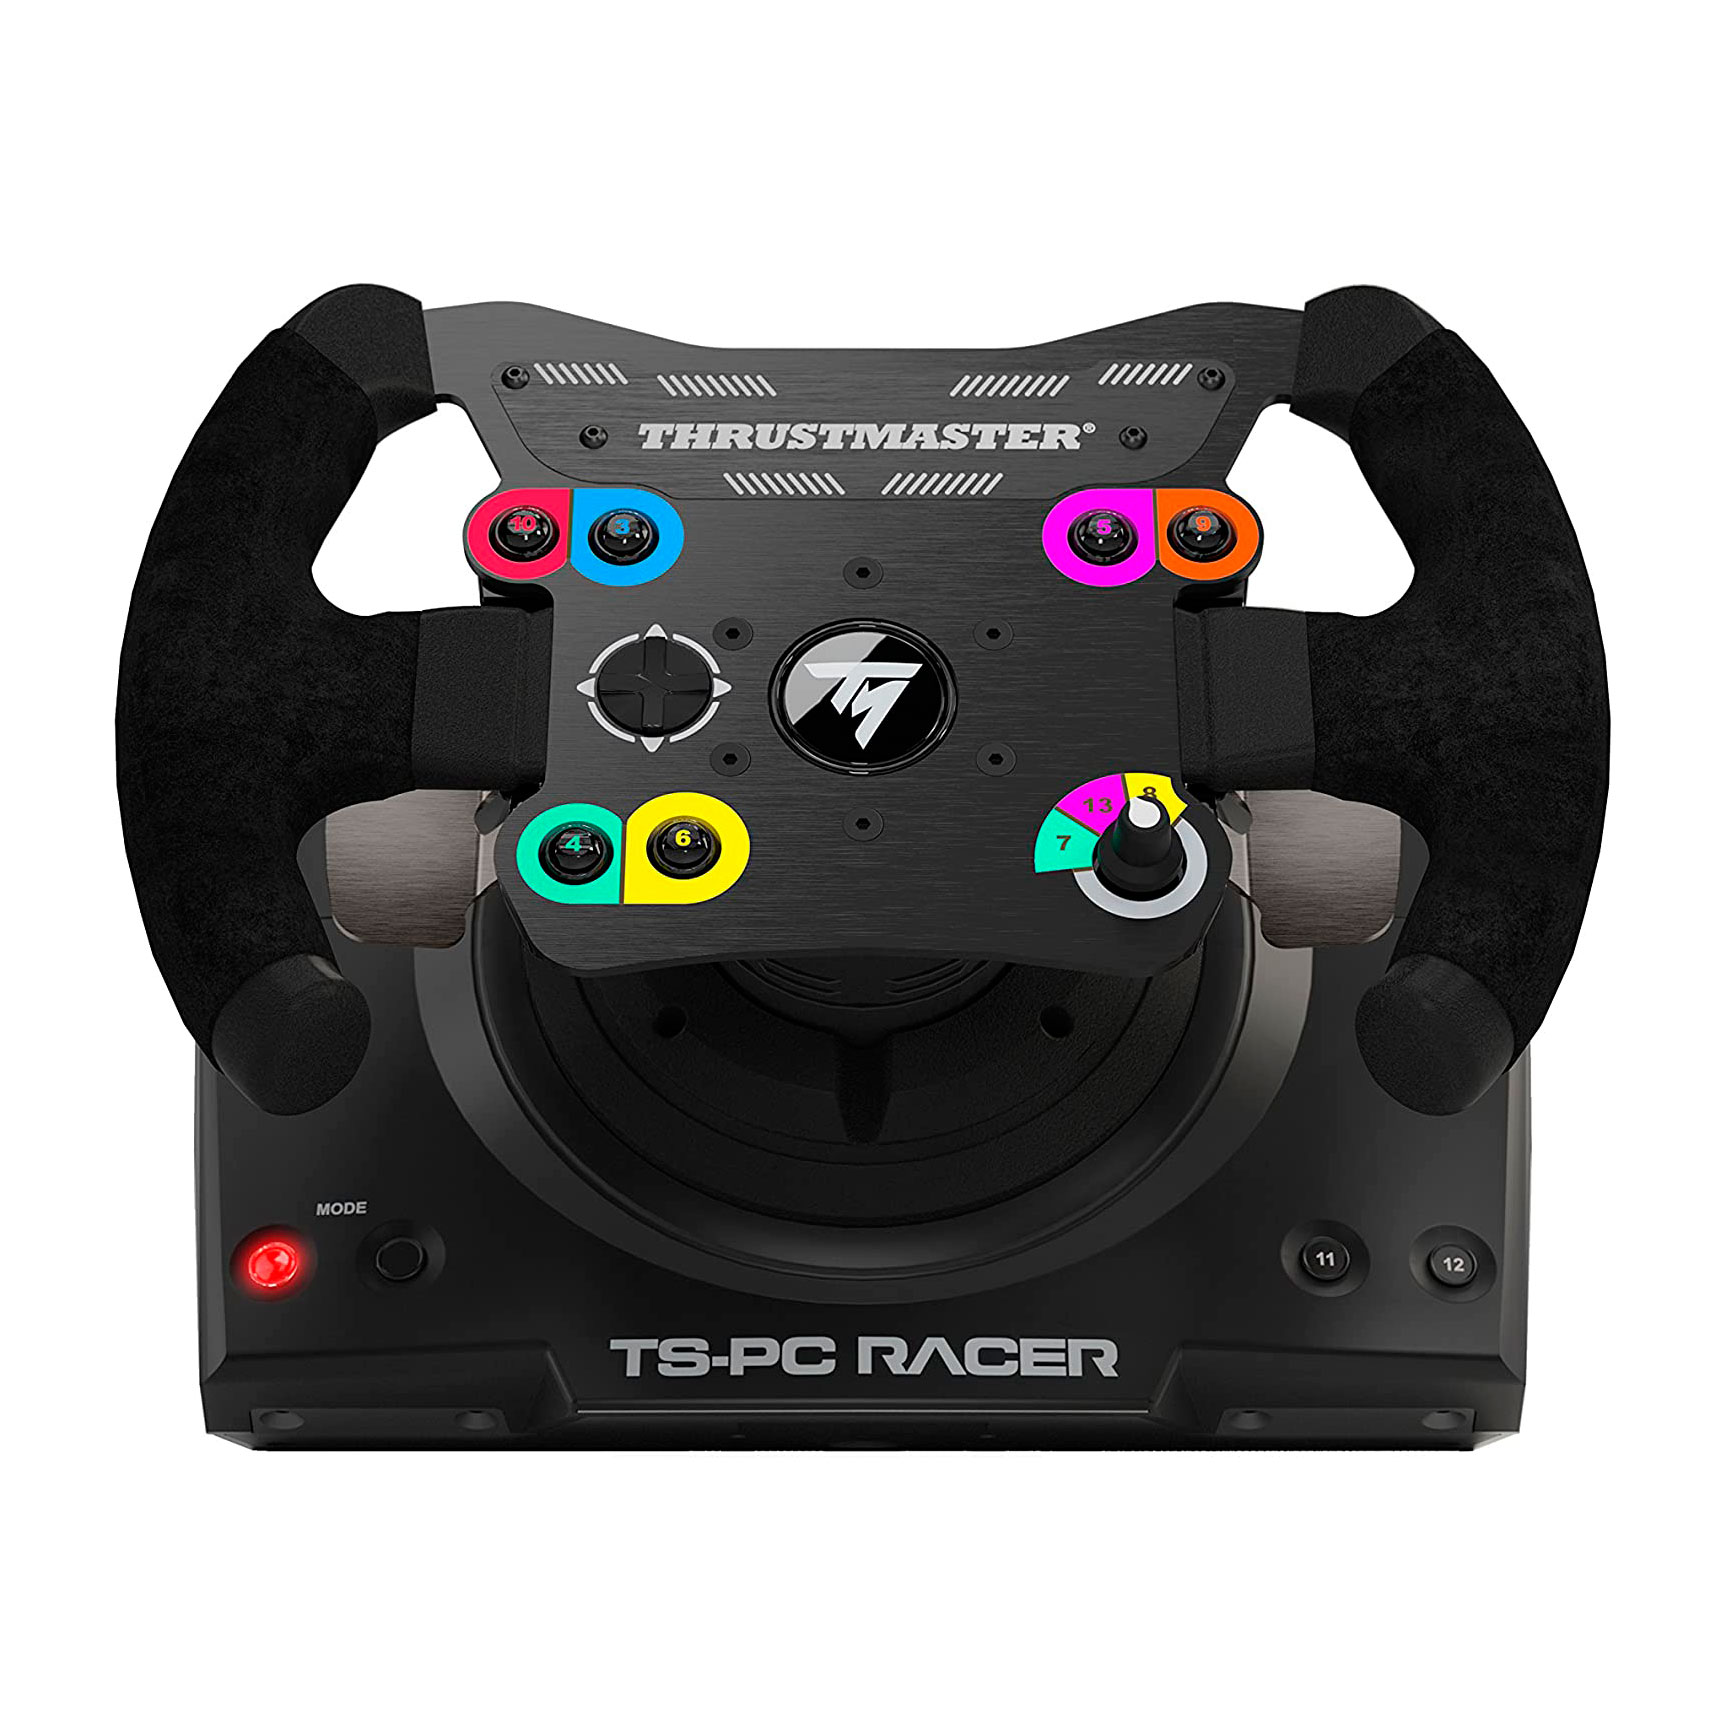 Руль Thrustmaster TS-PC Racer, черный руль thrustmaster t248p черный